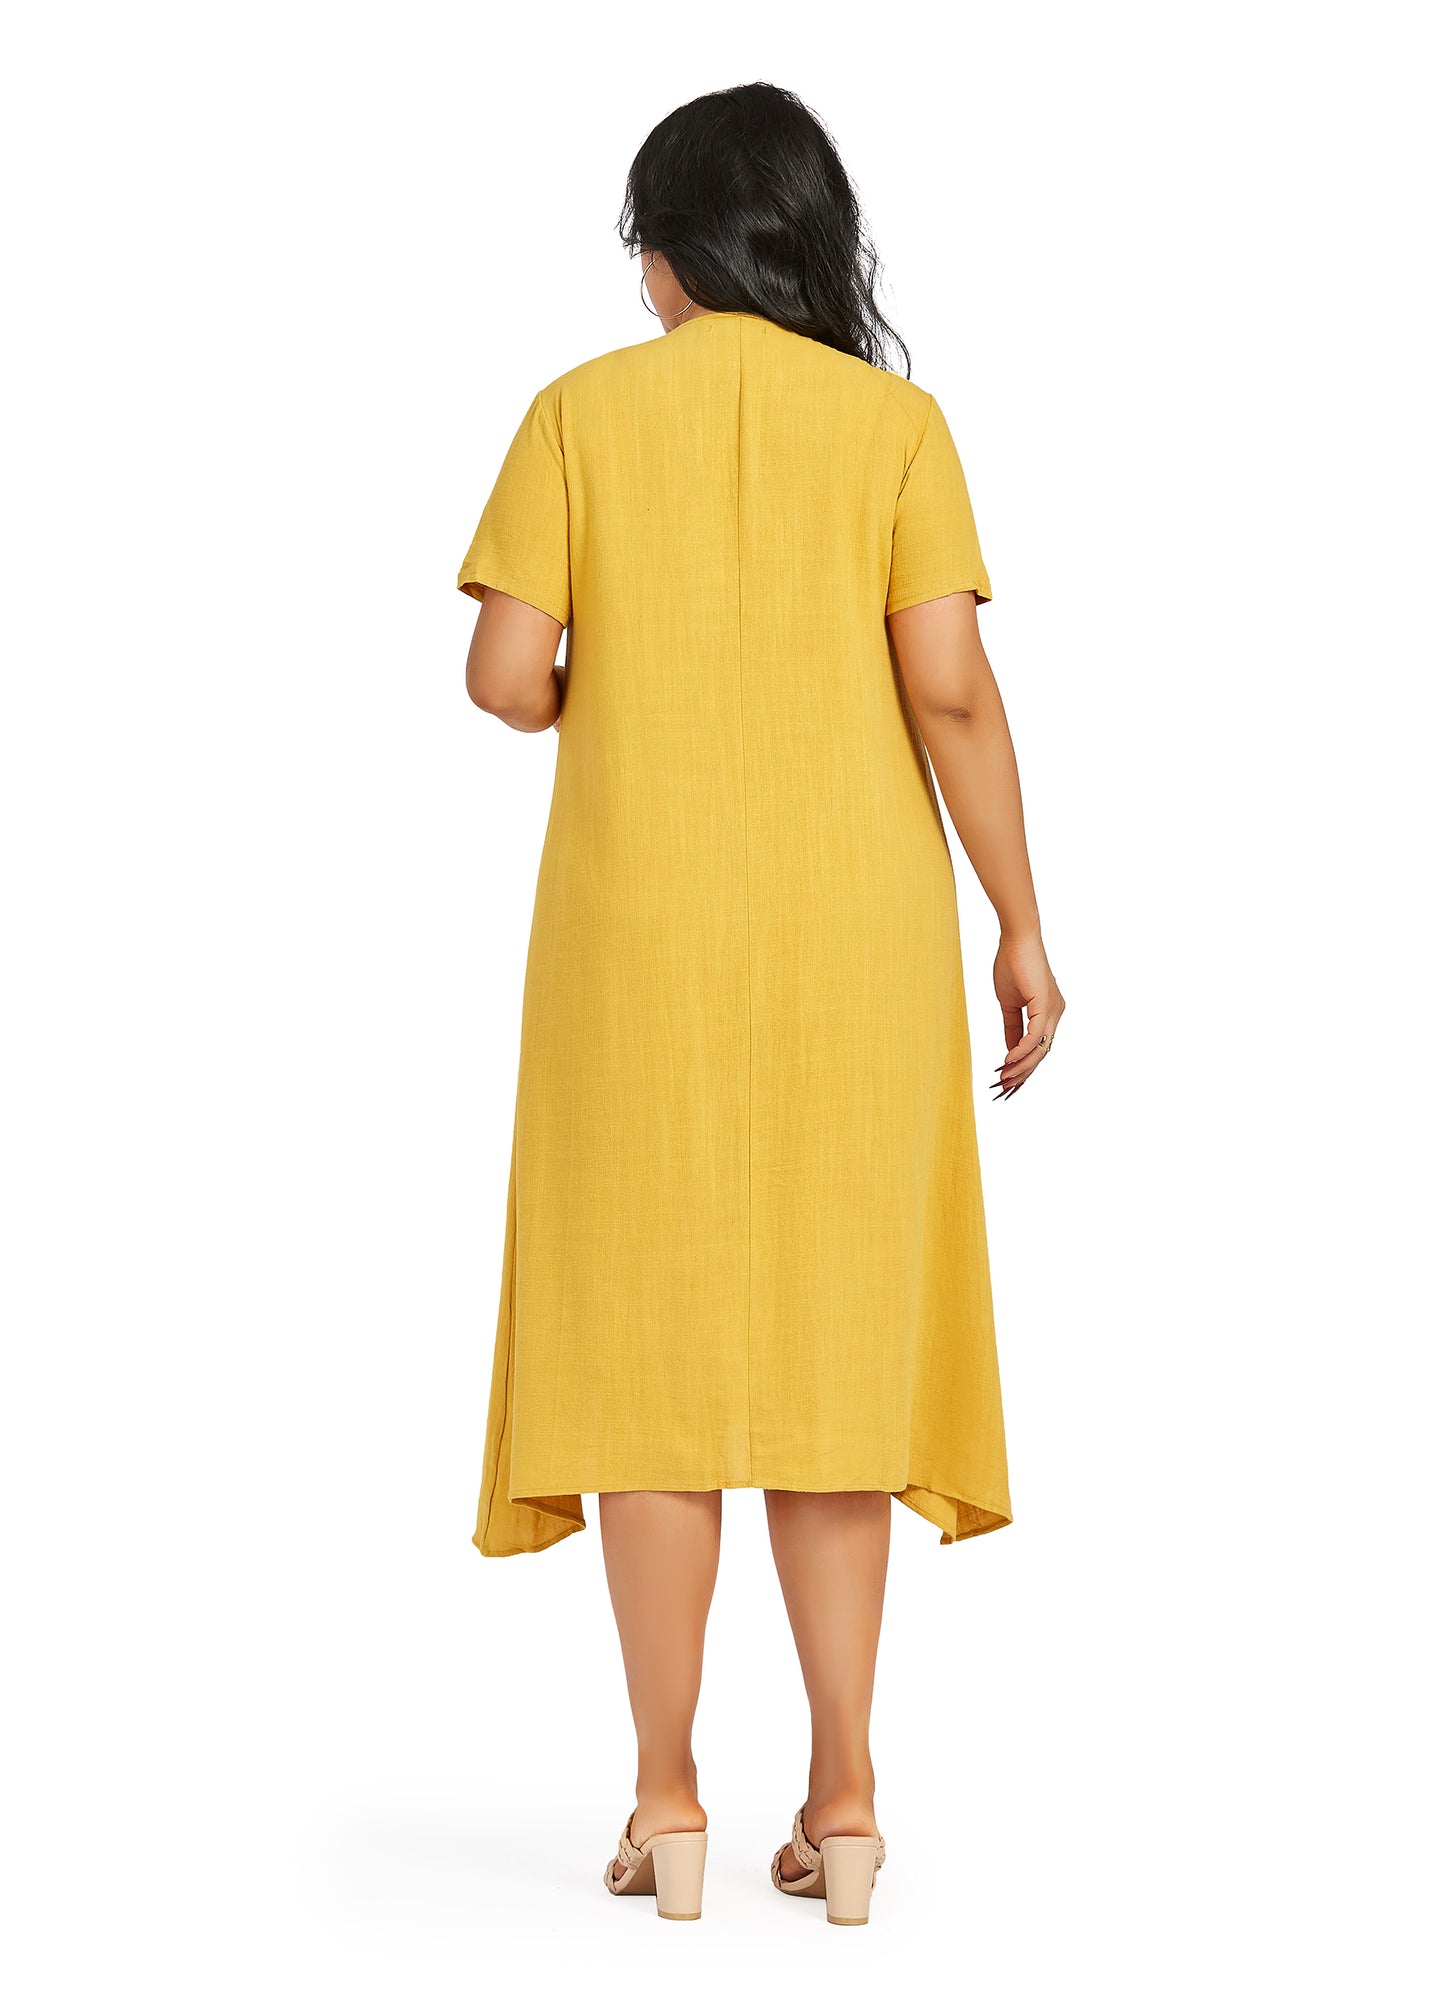 MECALA Women's Plus Size Solid Short Sleeve Maxi Dress